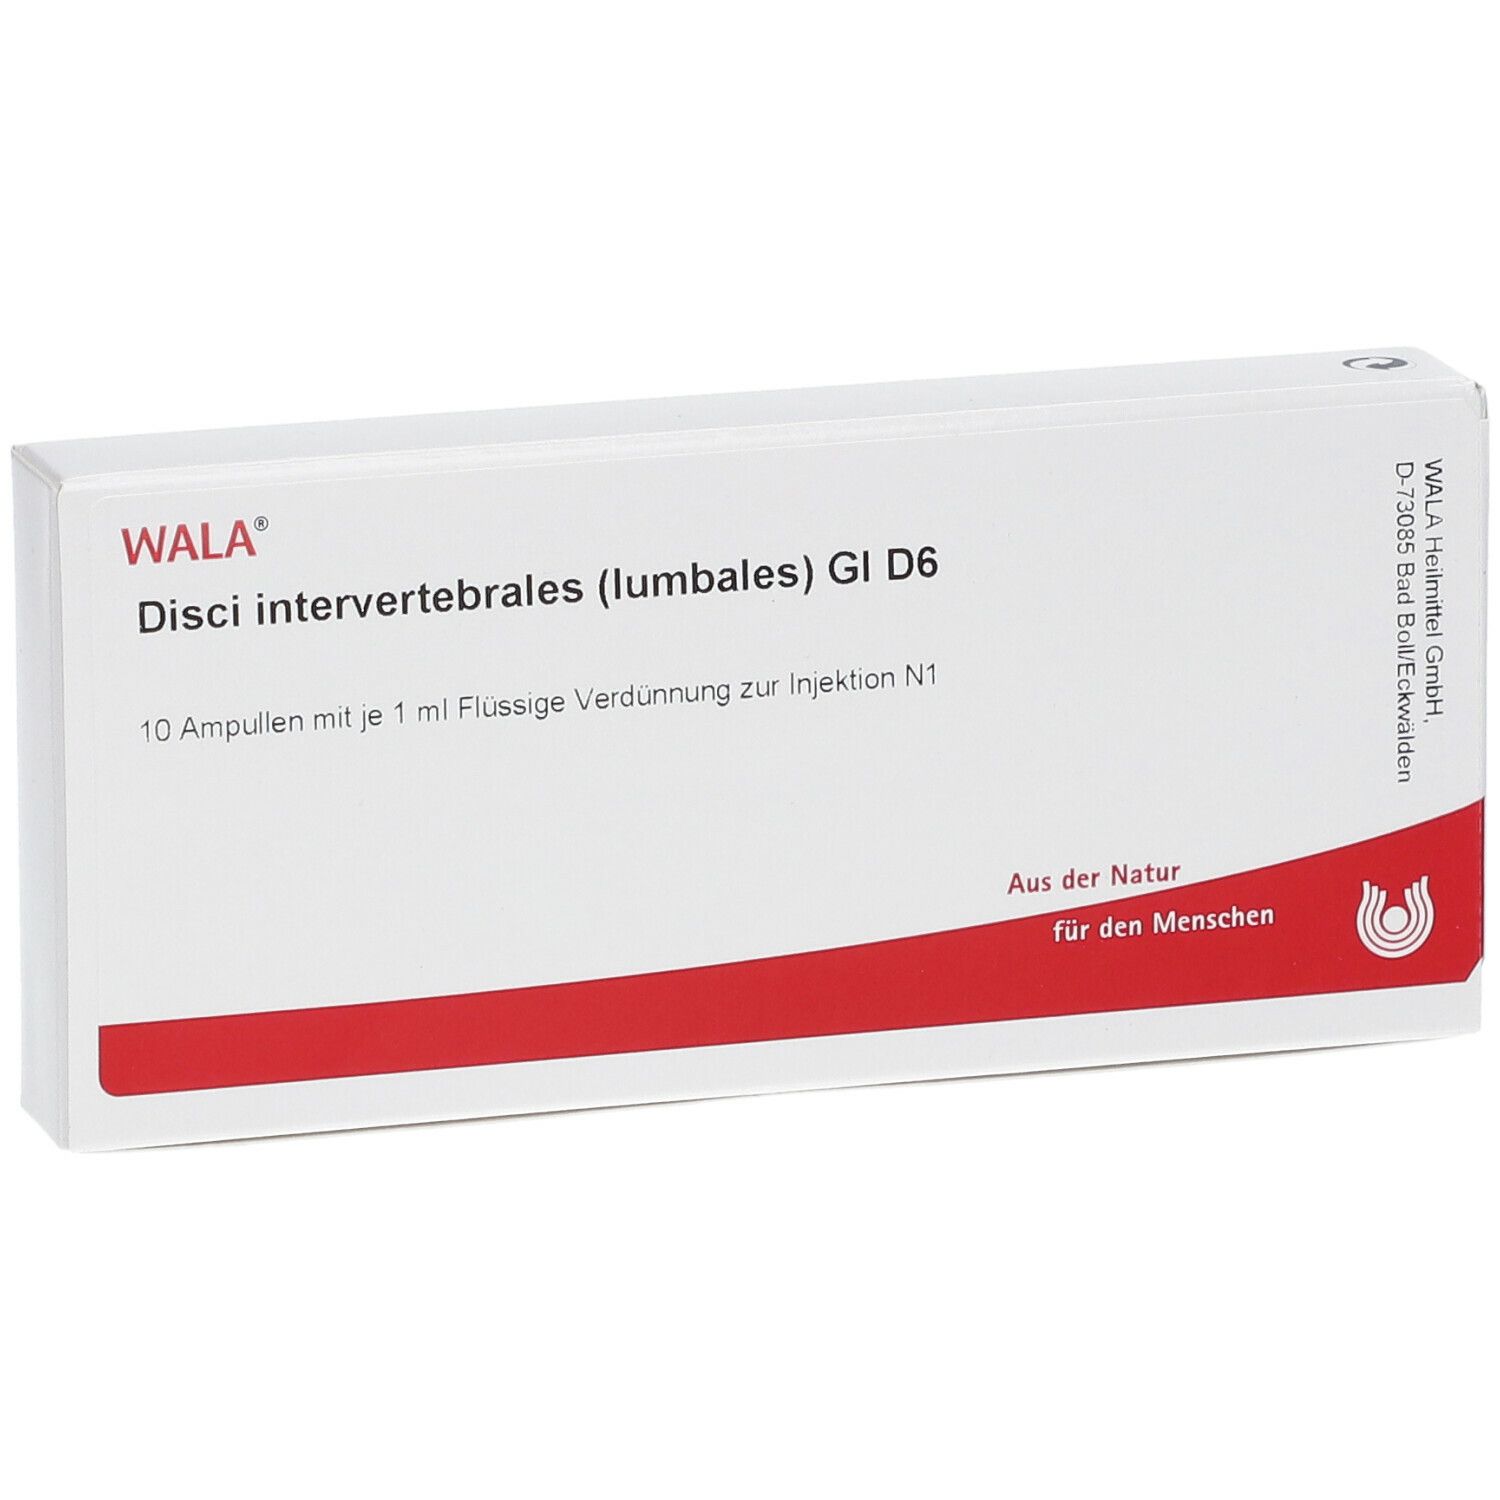 WALA® Disci intervertebrales lumbales Gl D 6